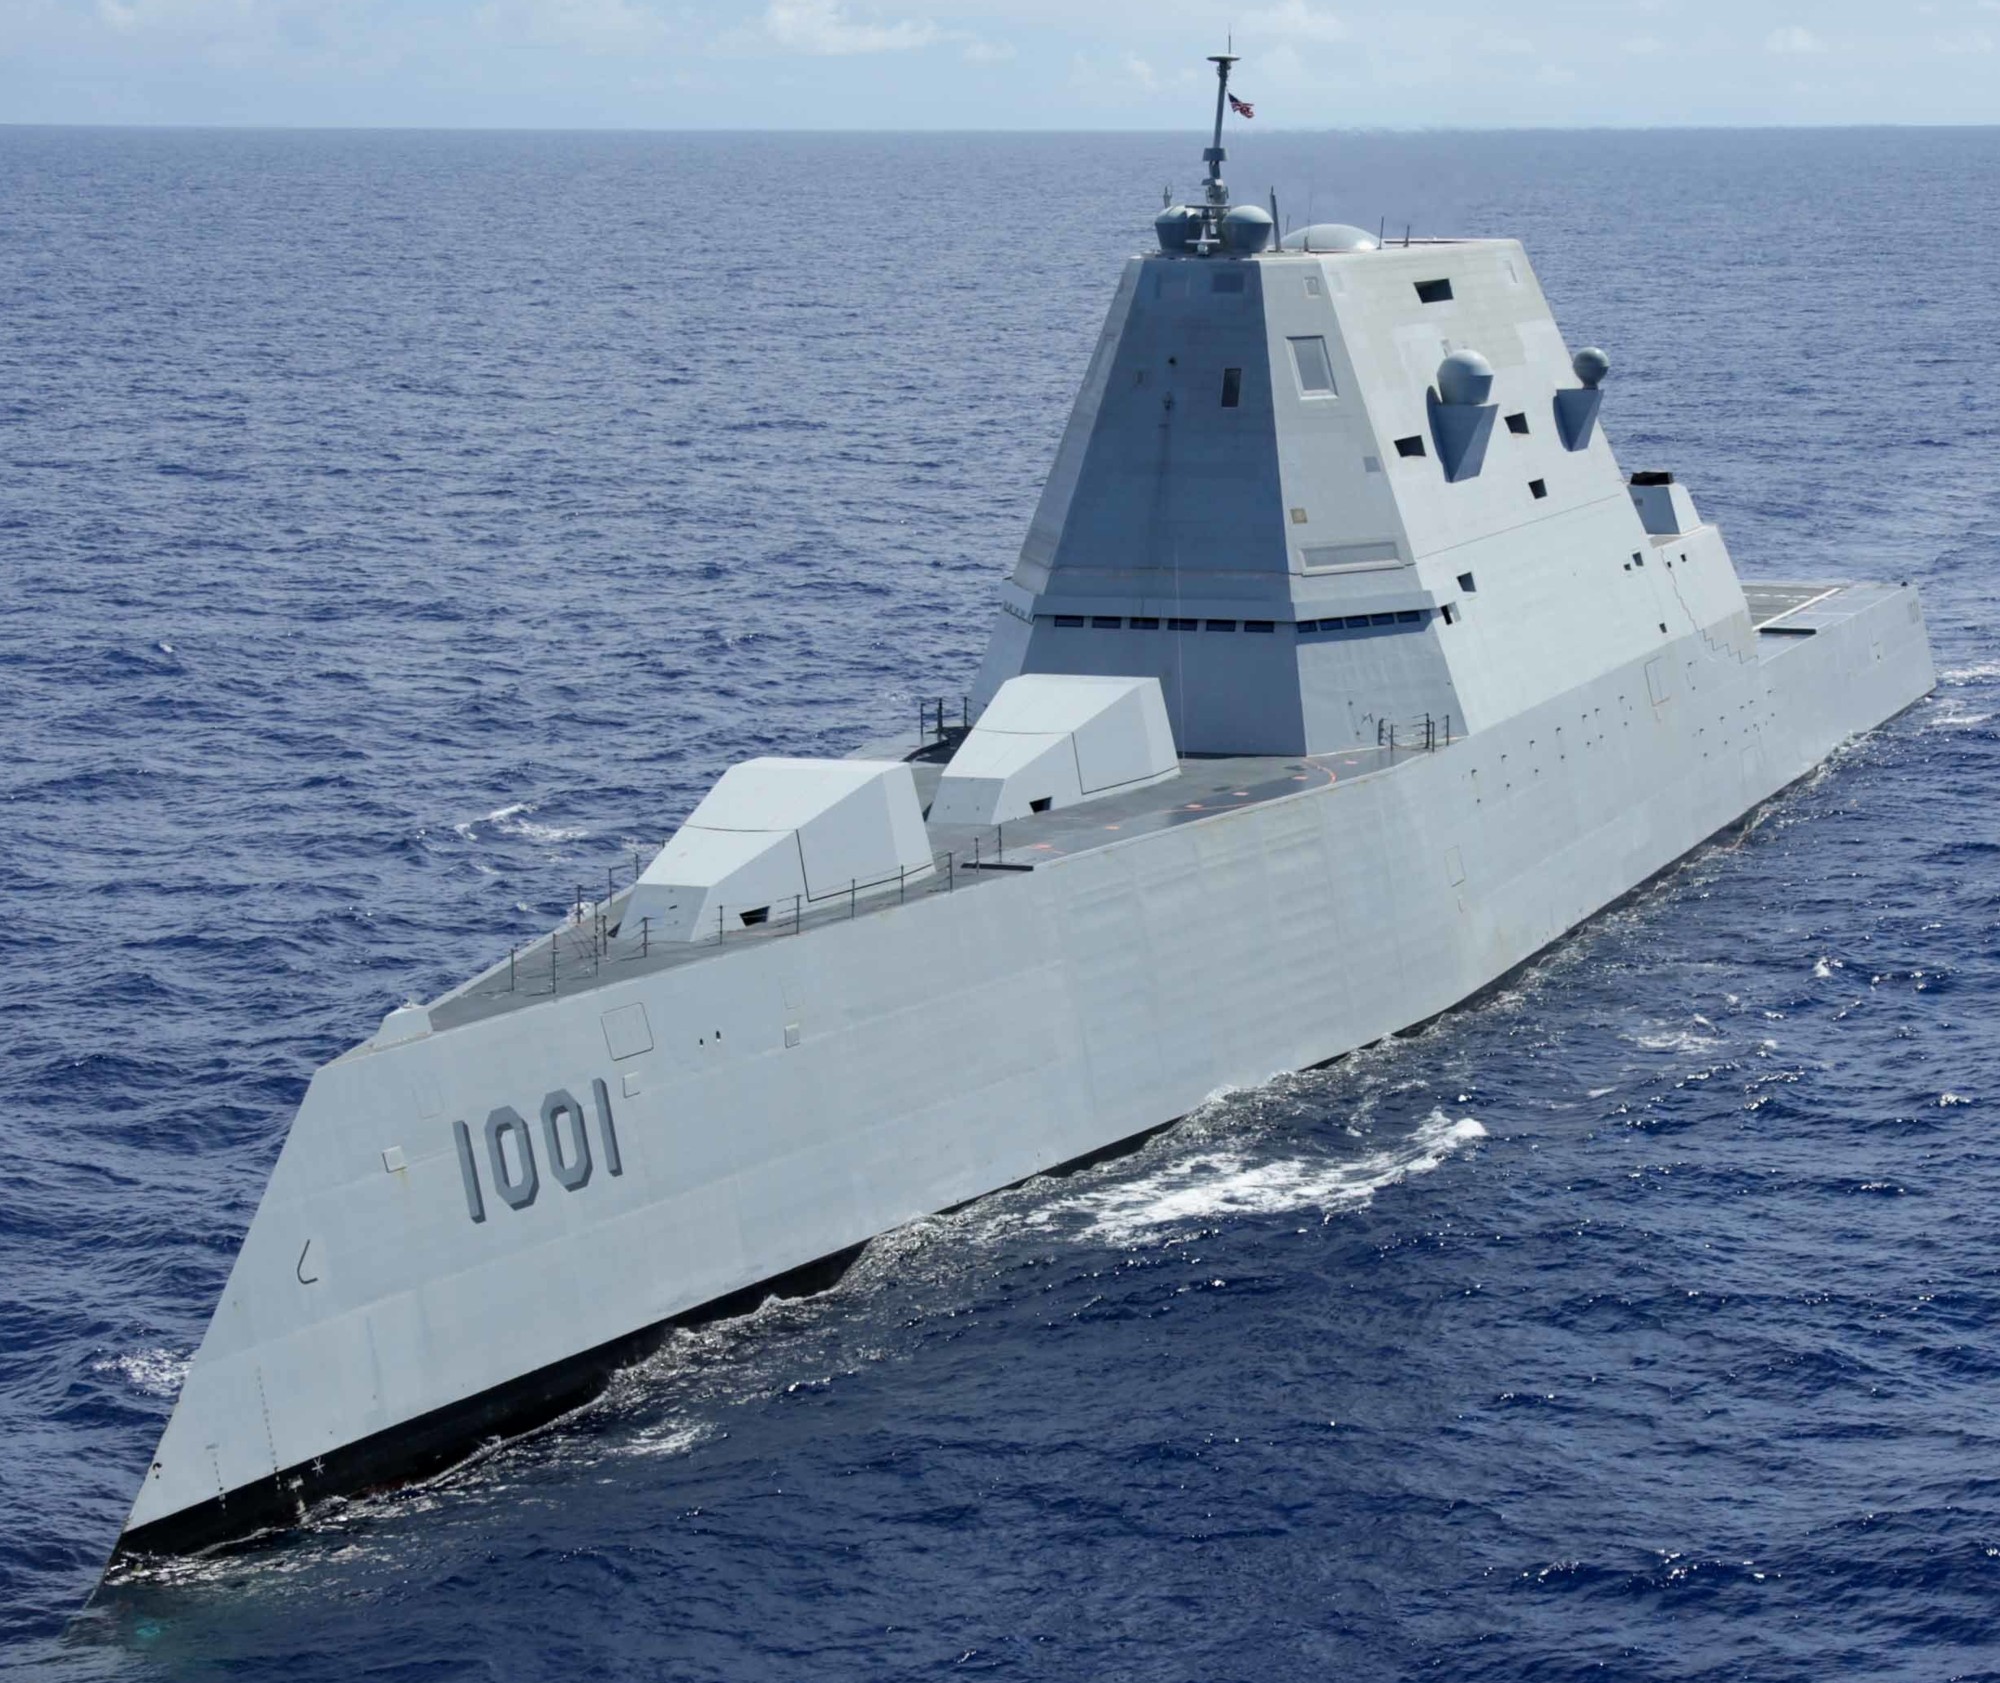 ddg-1001 uss michael monsoor zumwalt class guided missile destroyer us navy rimpac pacific 49